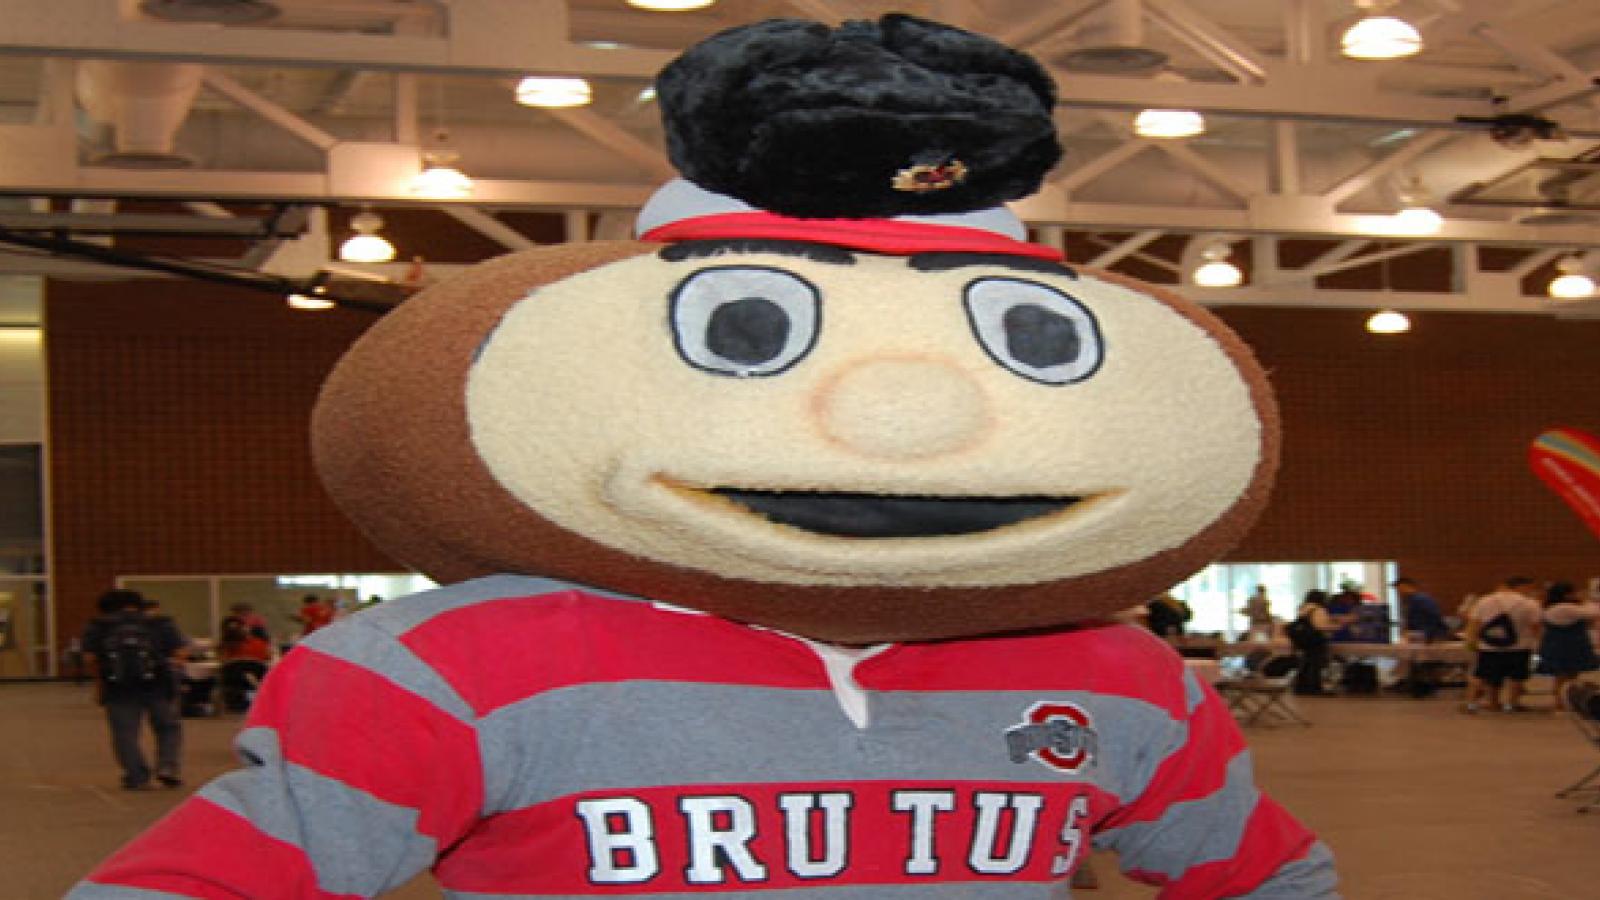 Brutus mascot wearing a Russian fur hat.